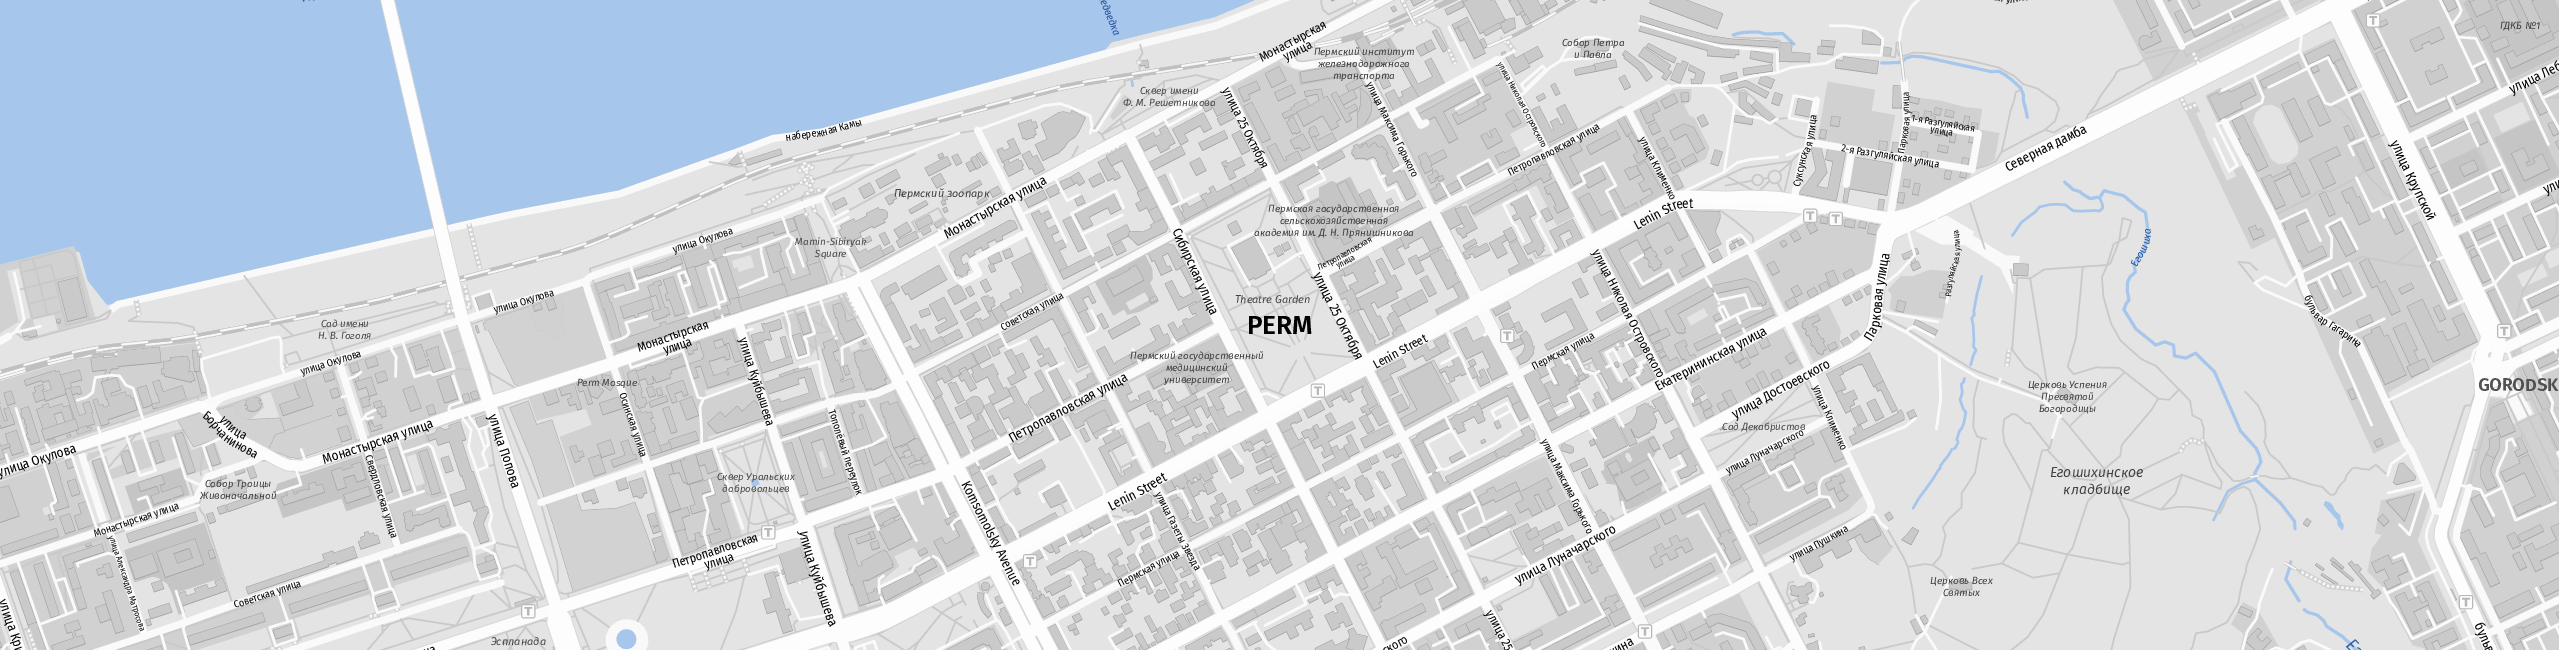 Stadtplan Perm zum Downloaden.